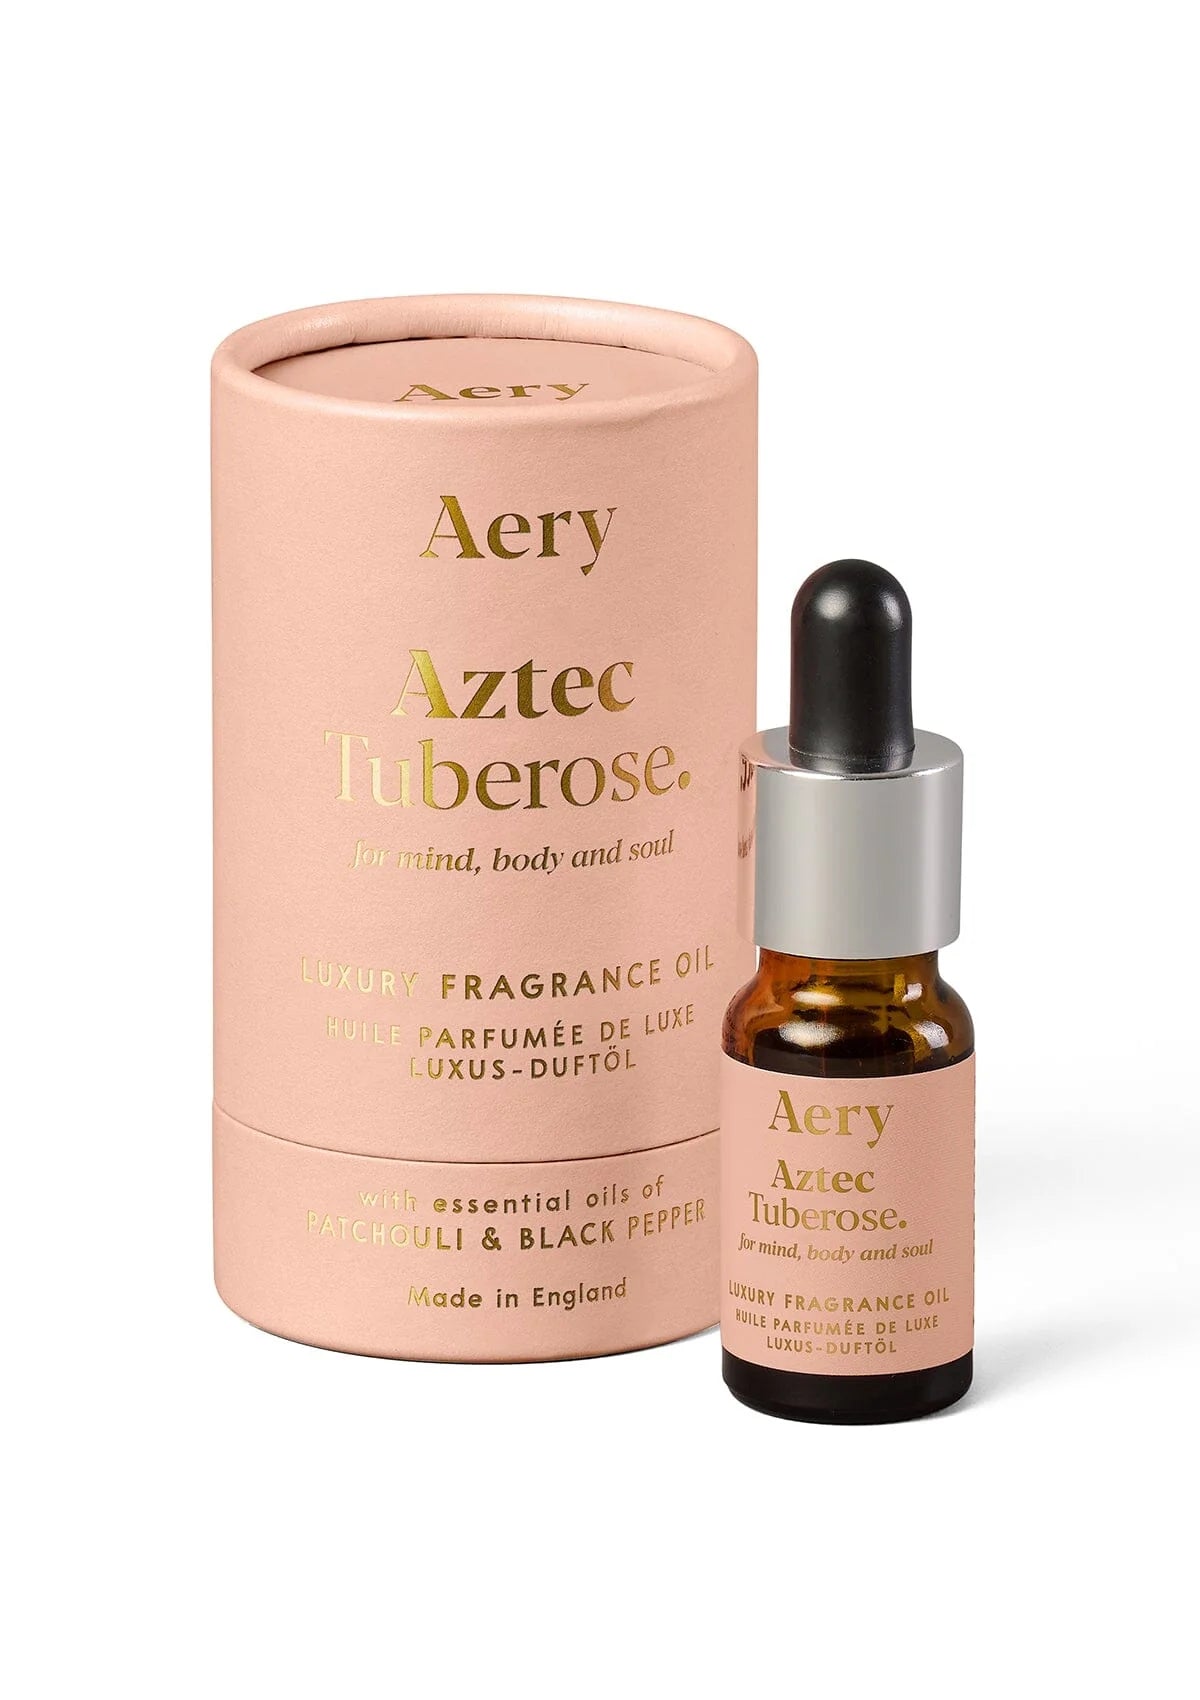 Aery - Aztec Tuberose Fragrance Oil